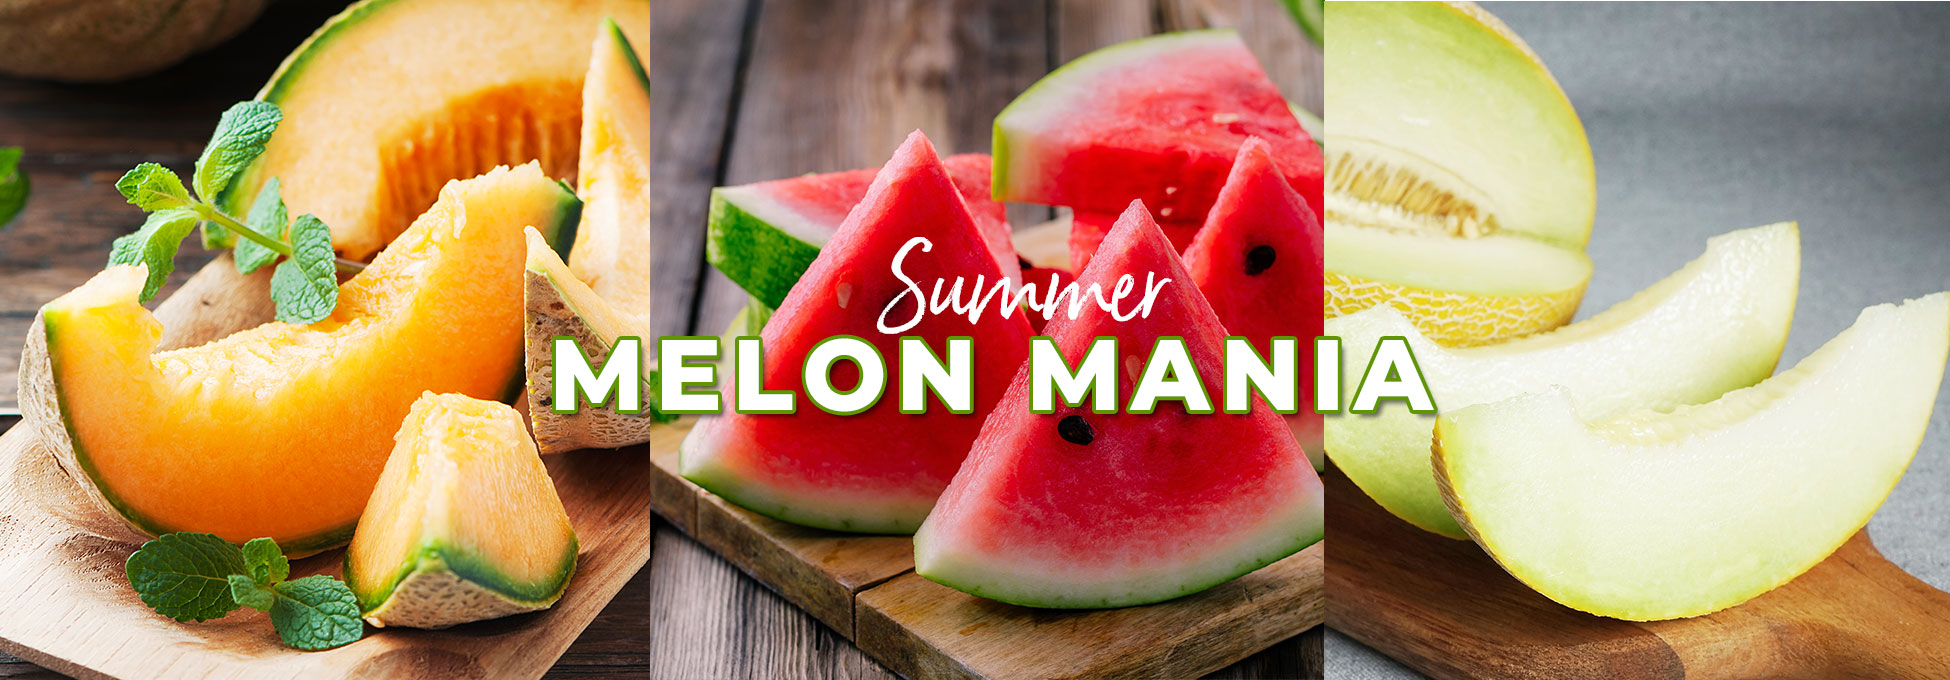 trigs-homepg-banner-summer-melon-mania.jpg